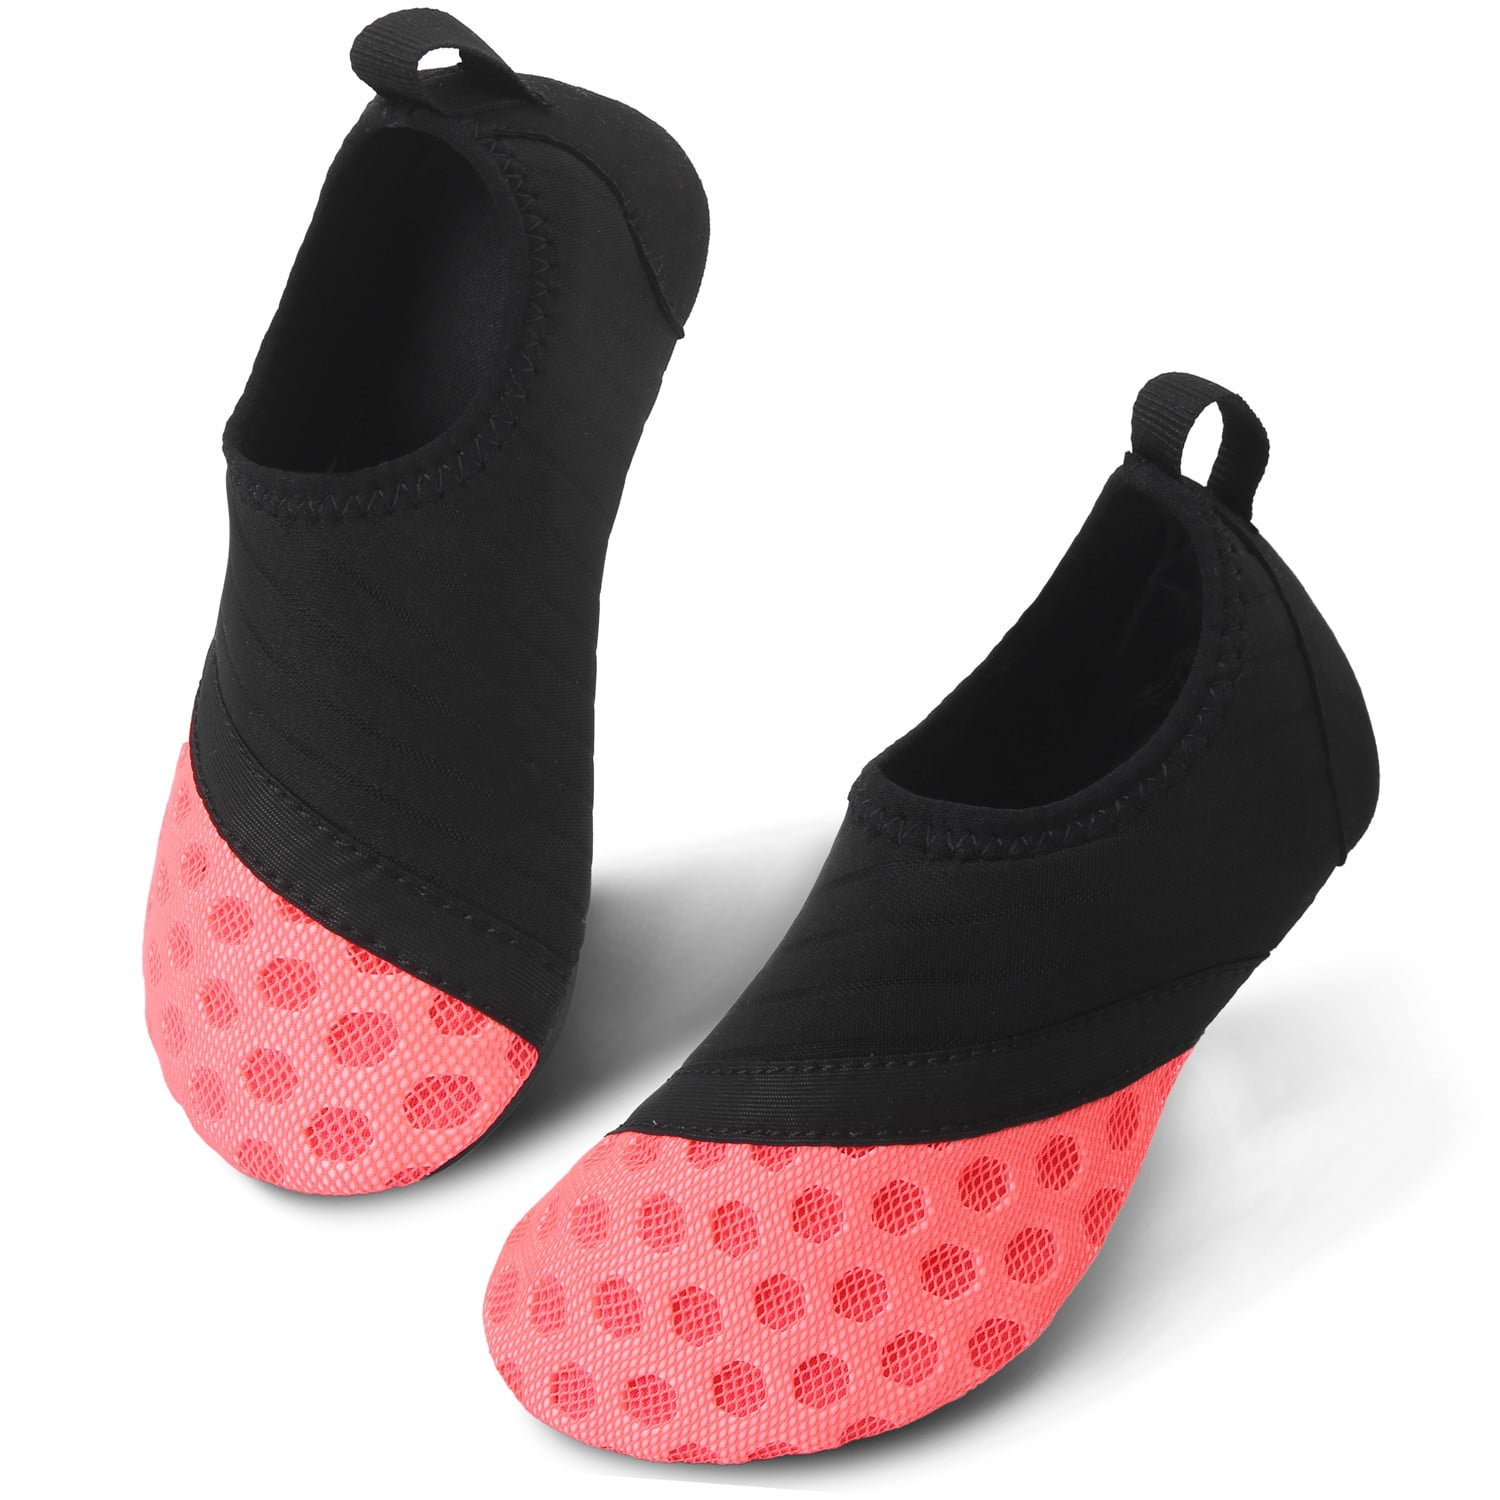 SAGUARO Boys Girls Kids Sneaker Breathable Slip On Lightweight Garden Clogs Outdoor Beach Water Shoes Pink 1 M US Big Kid